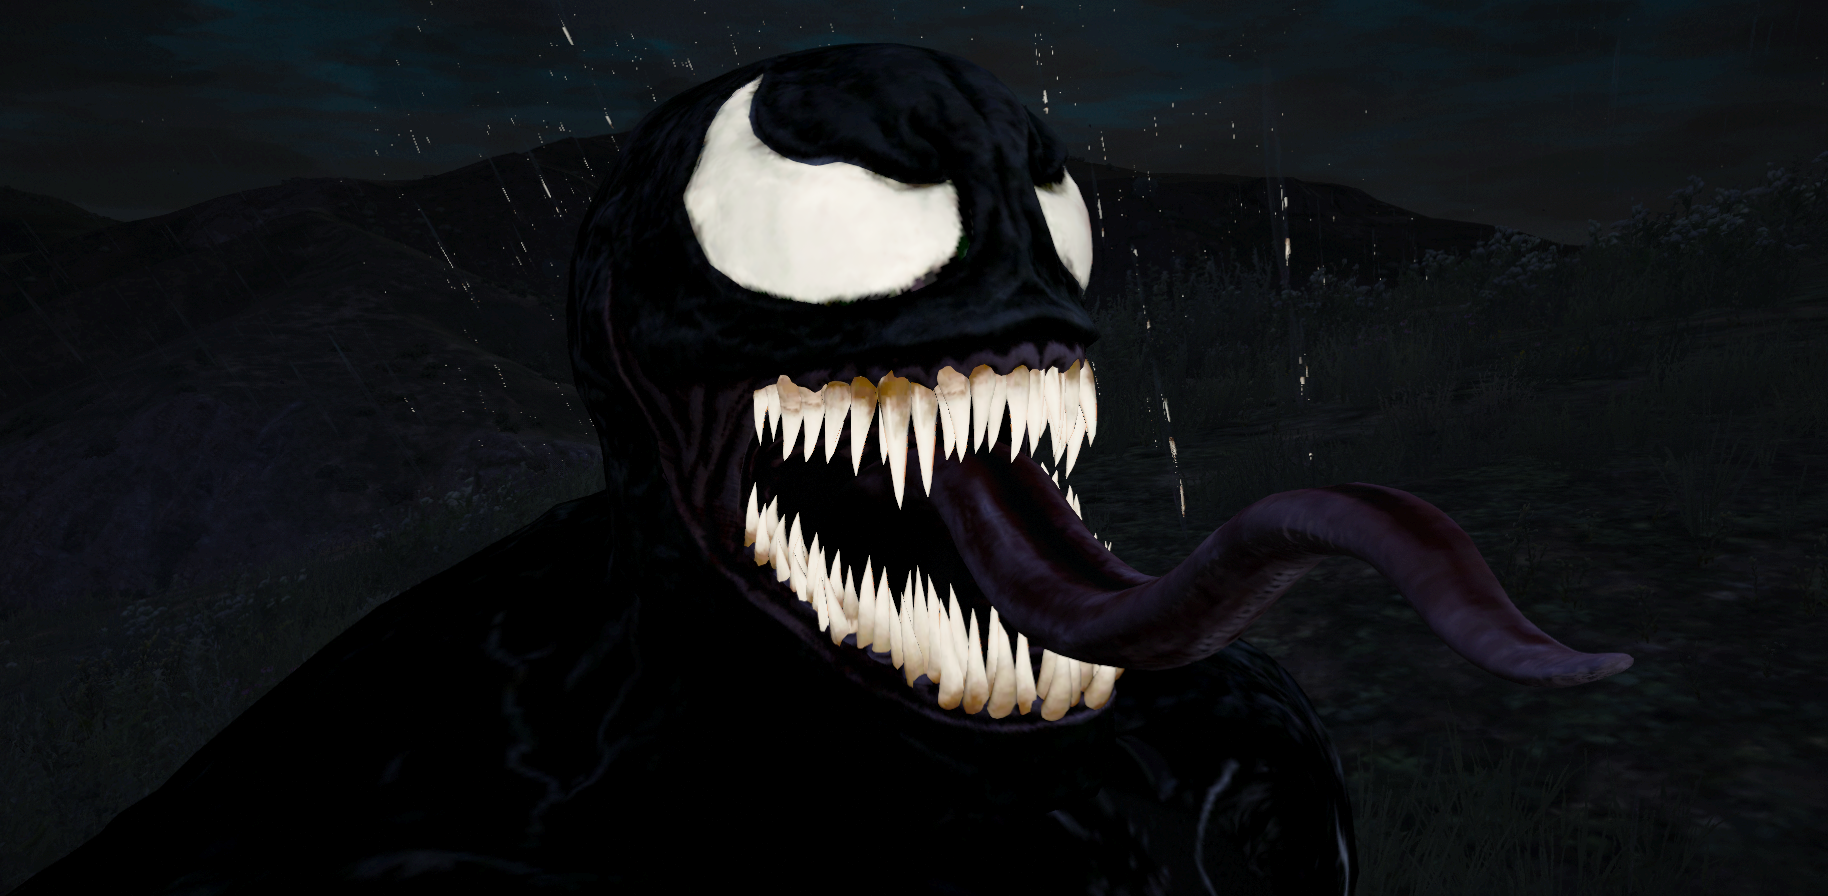 instal the last version for ios Venom